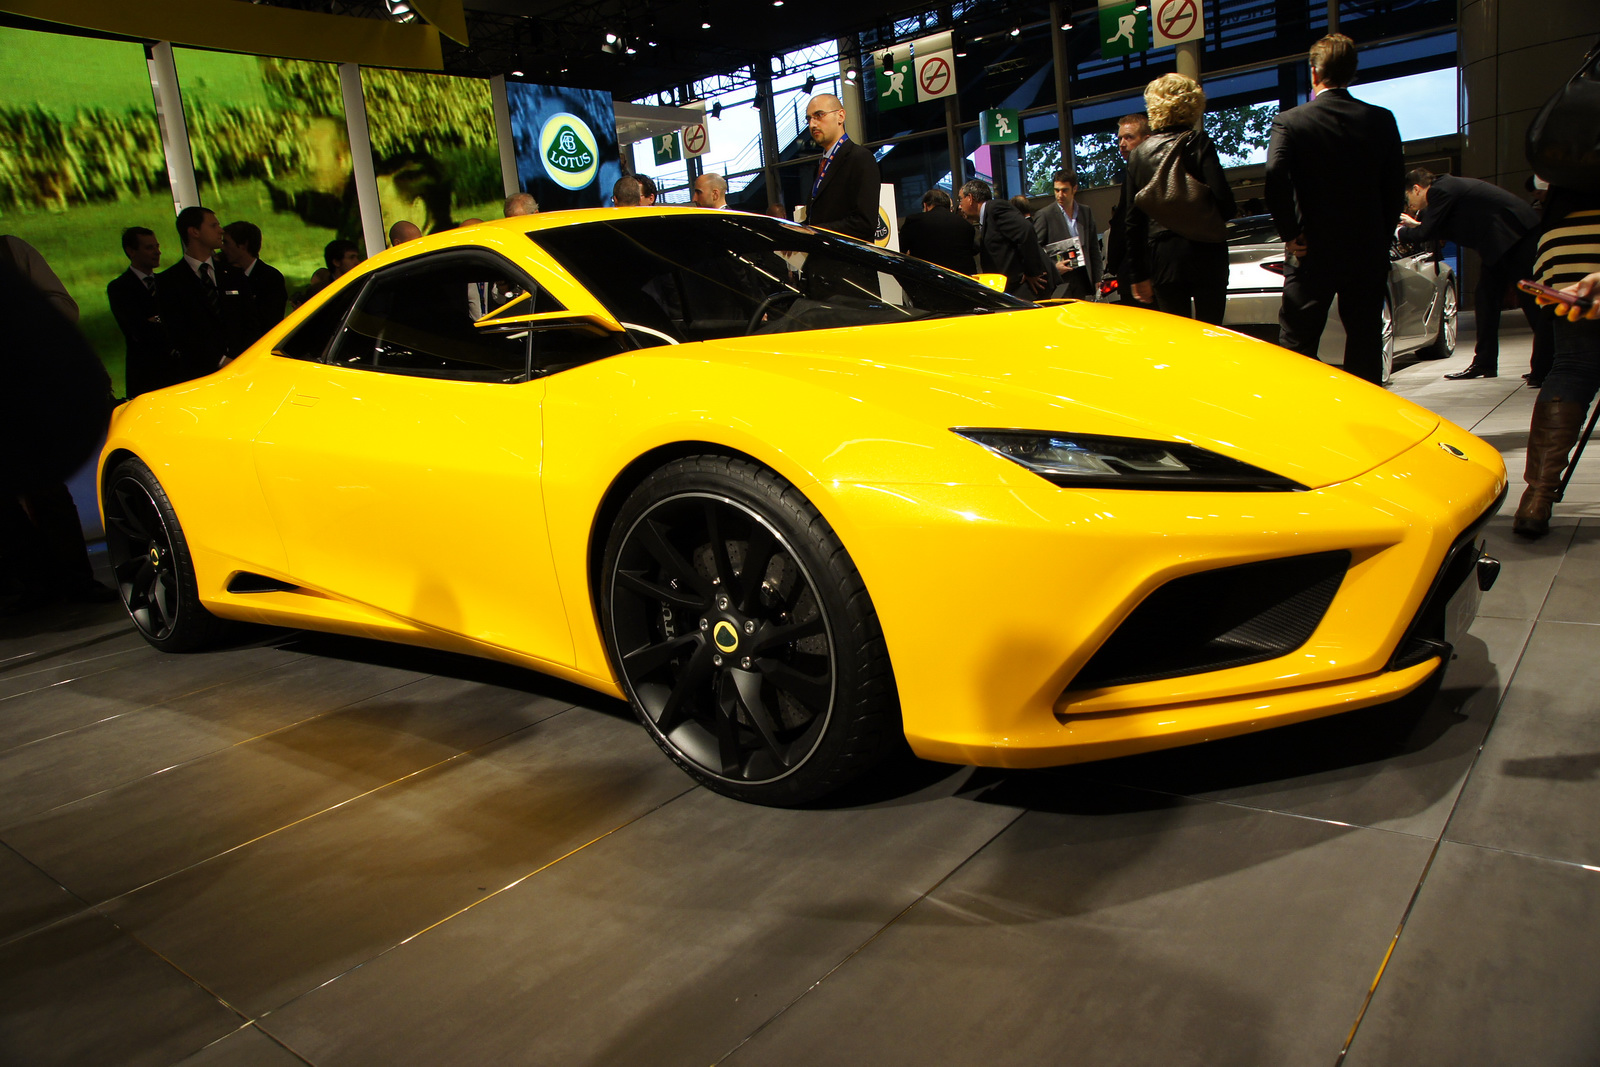 Paris Motor Show: Lotus Elan Makes A Comeback